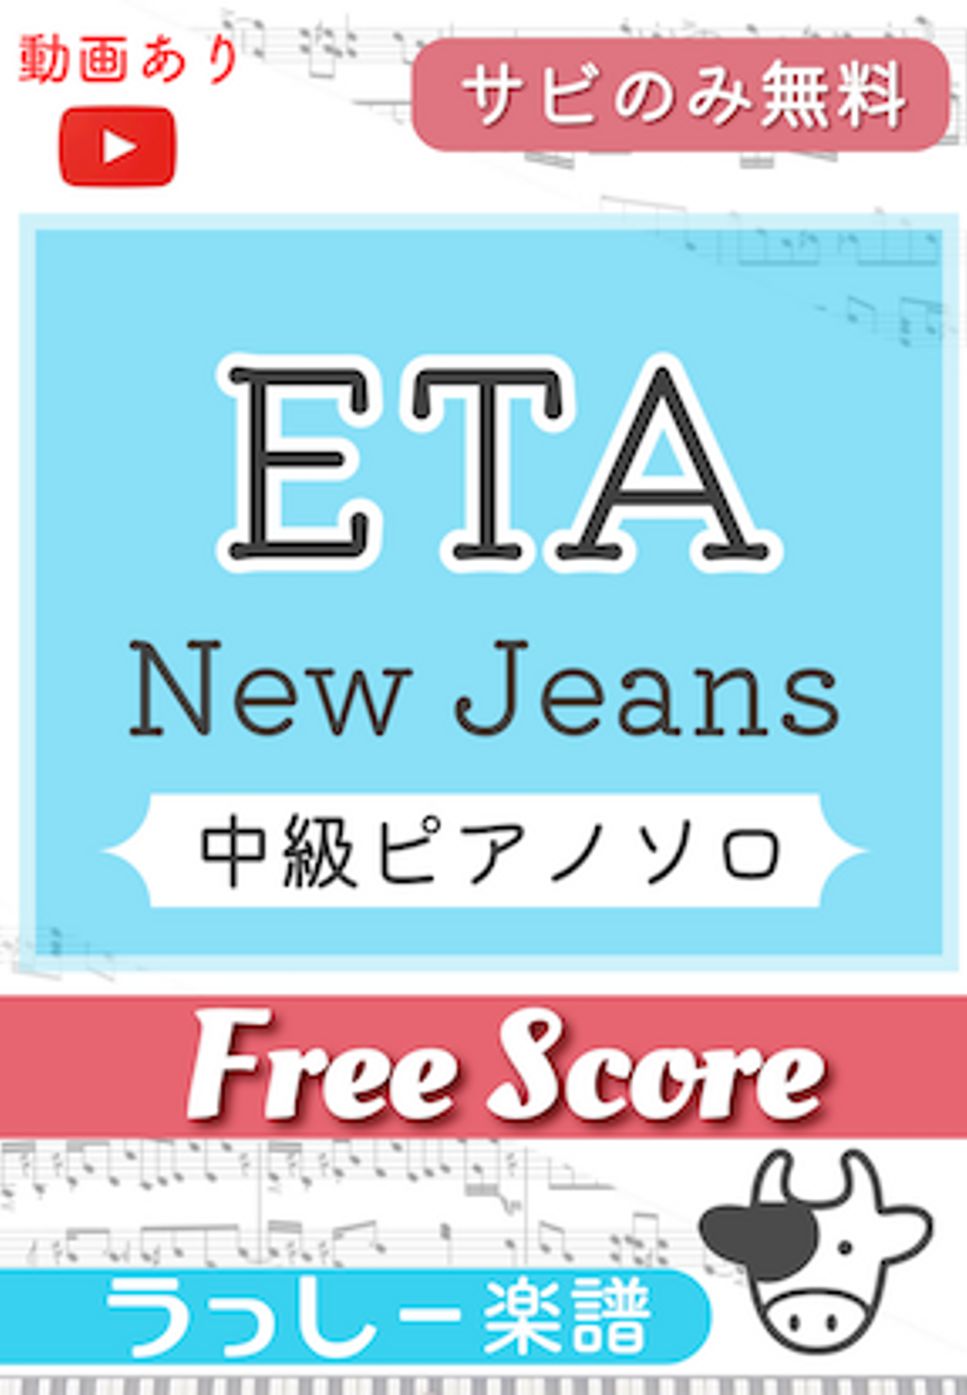 New Jeans - ETA (サビのみ無料) by 牛武奏人